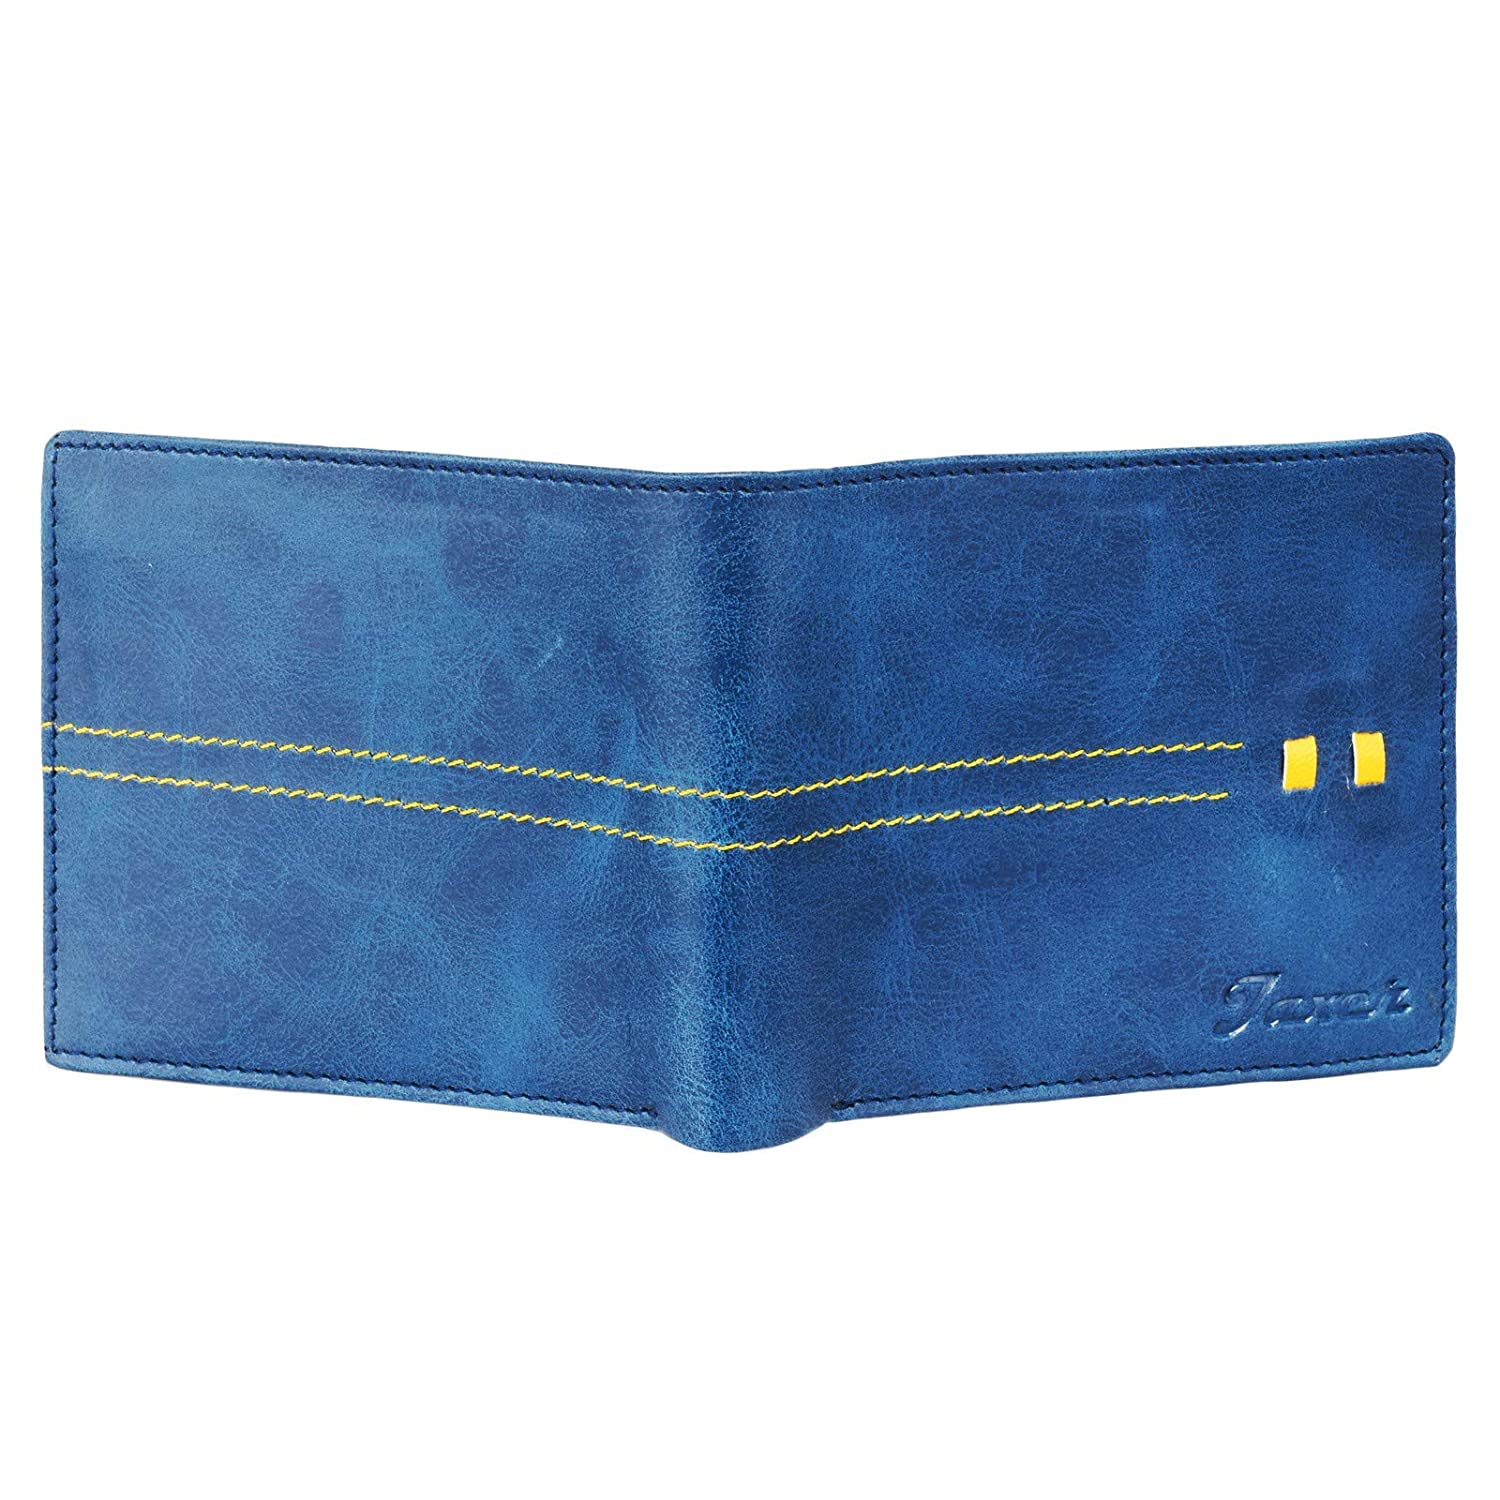 Men Casual Blue Genuine Leather Wallet - Mini (5 Card Slots) - Jainx Store